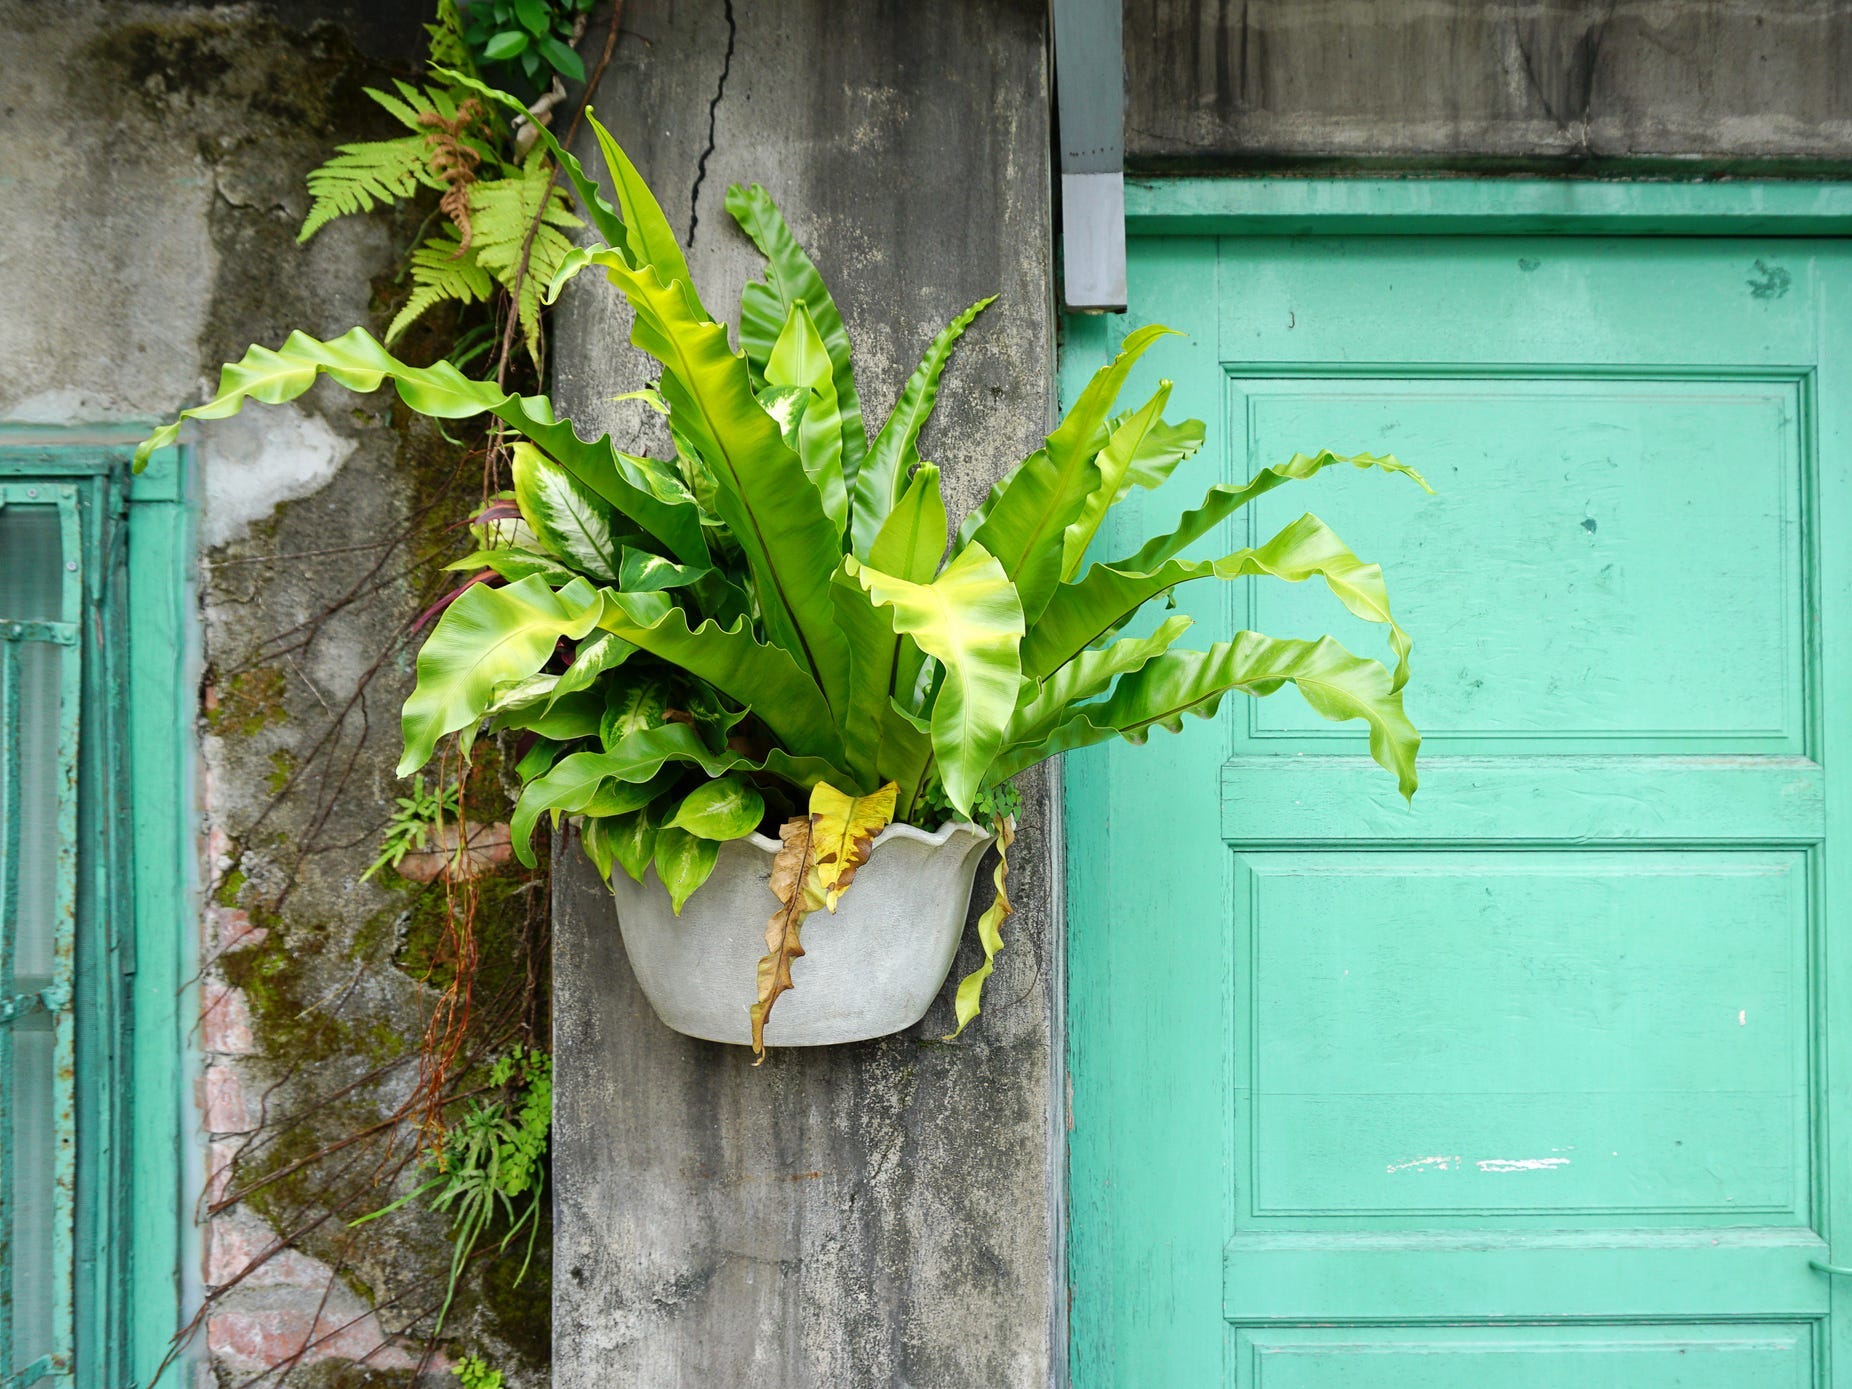 A bird's nest fern hanging against a wooden wall next to a bright green door